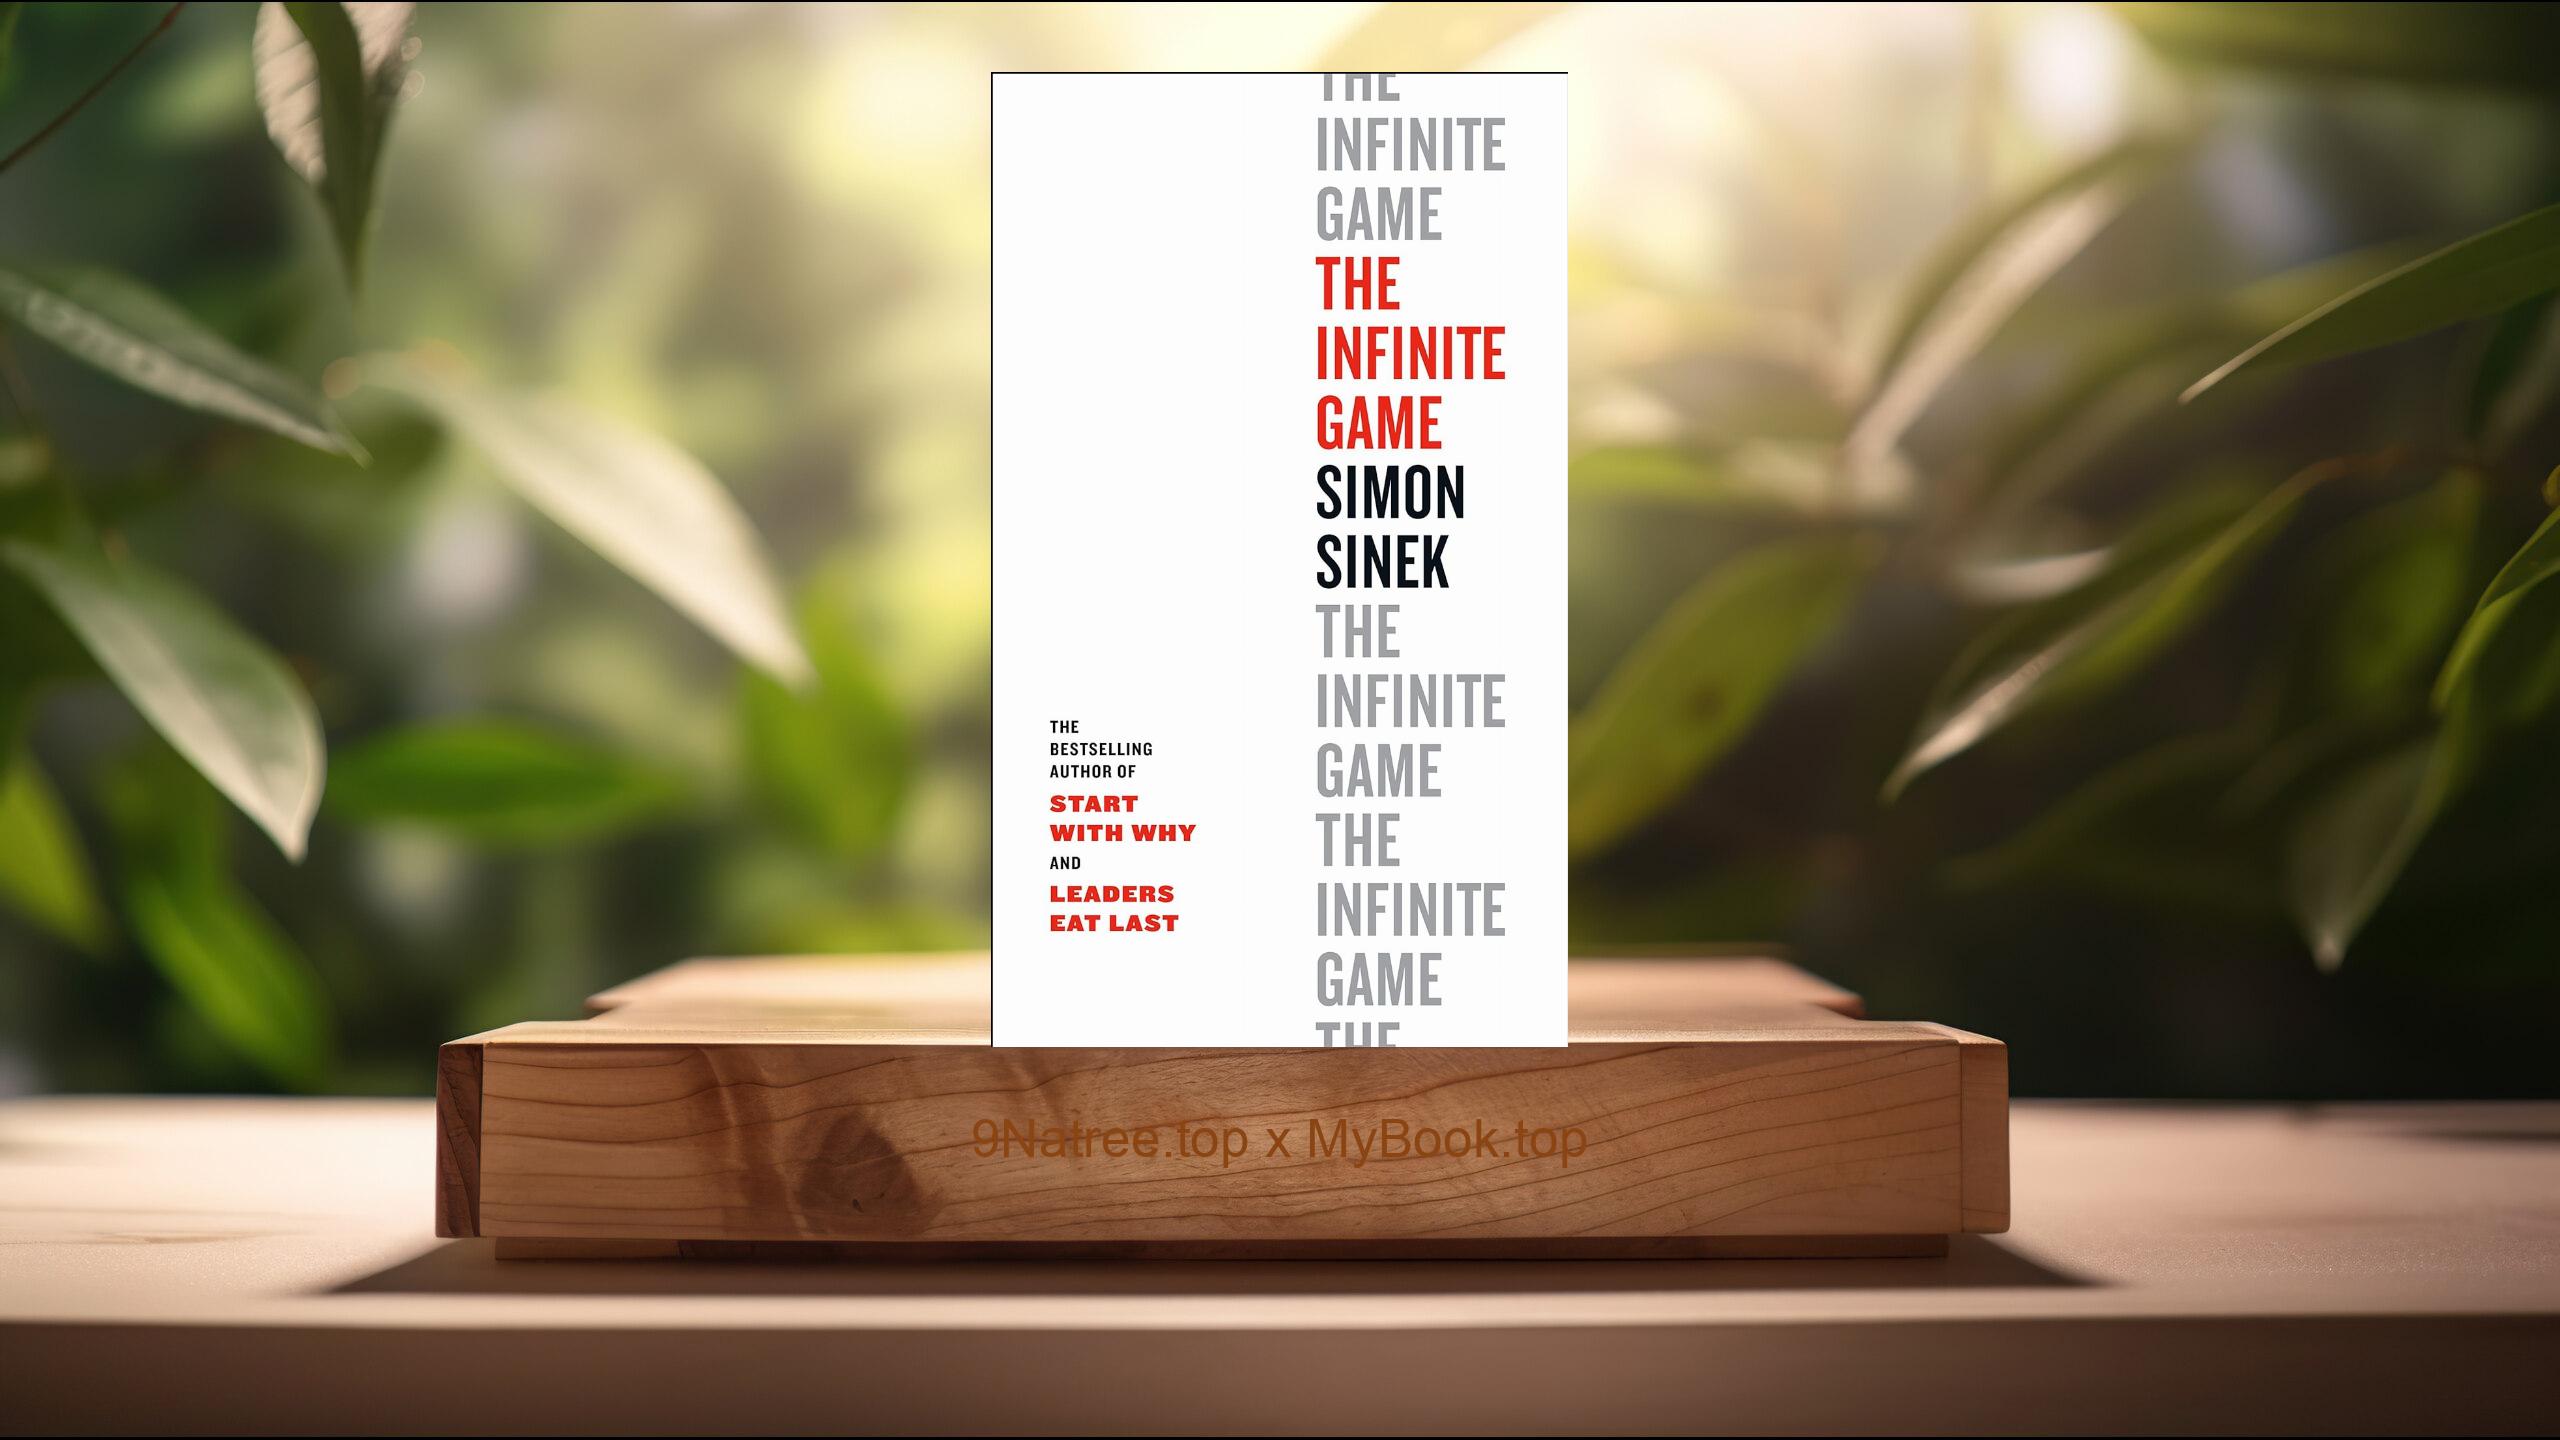 [Review] The Infinite Game (Simon Sinek) Summarized